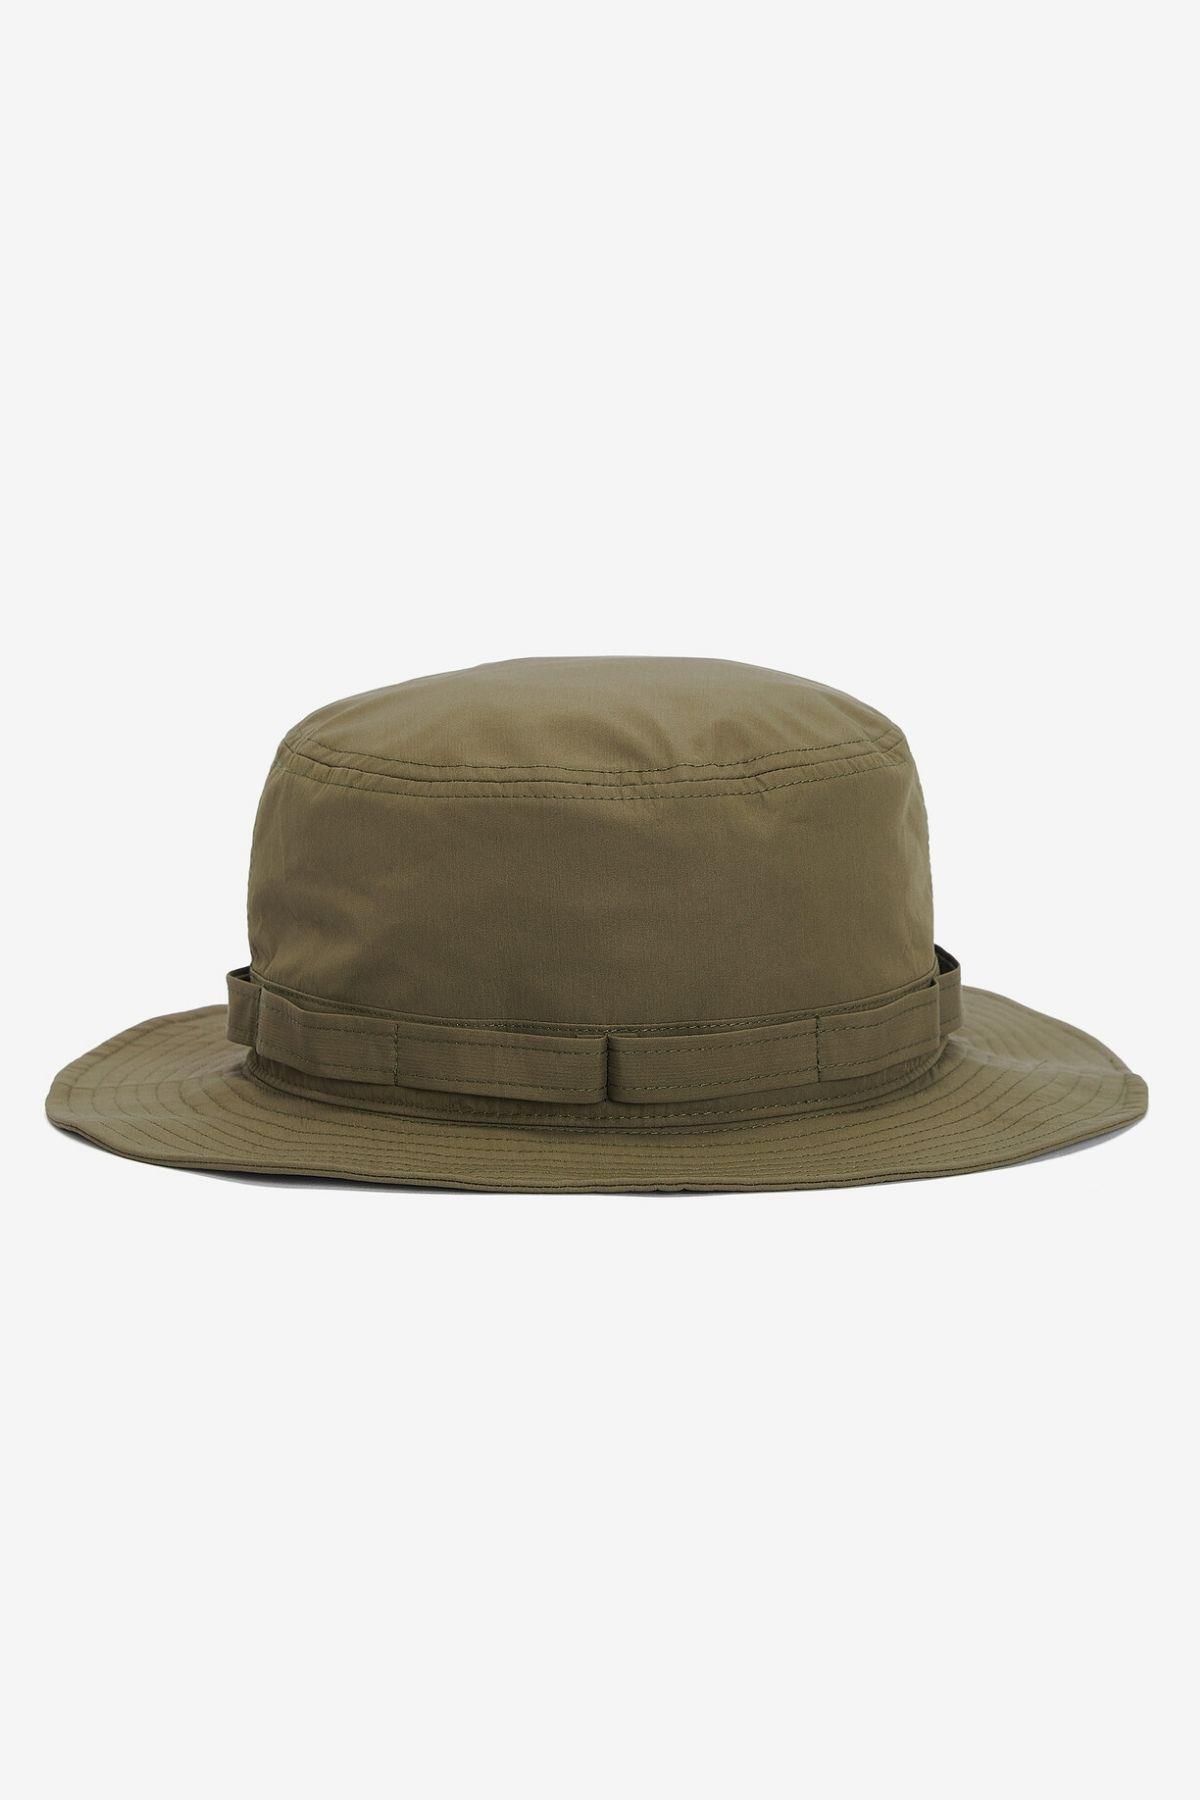 Barbour Teesdale Hatup Bucket Hat Ol51 Army Green